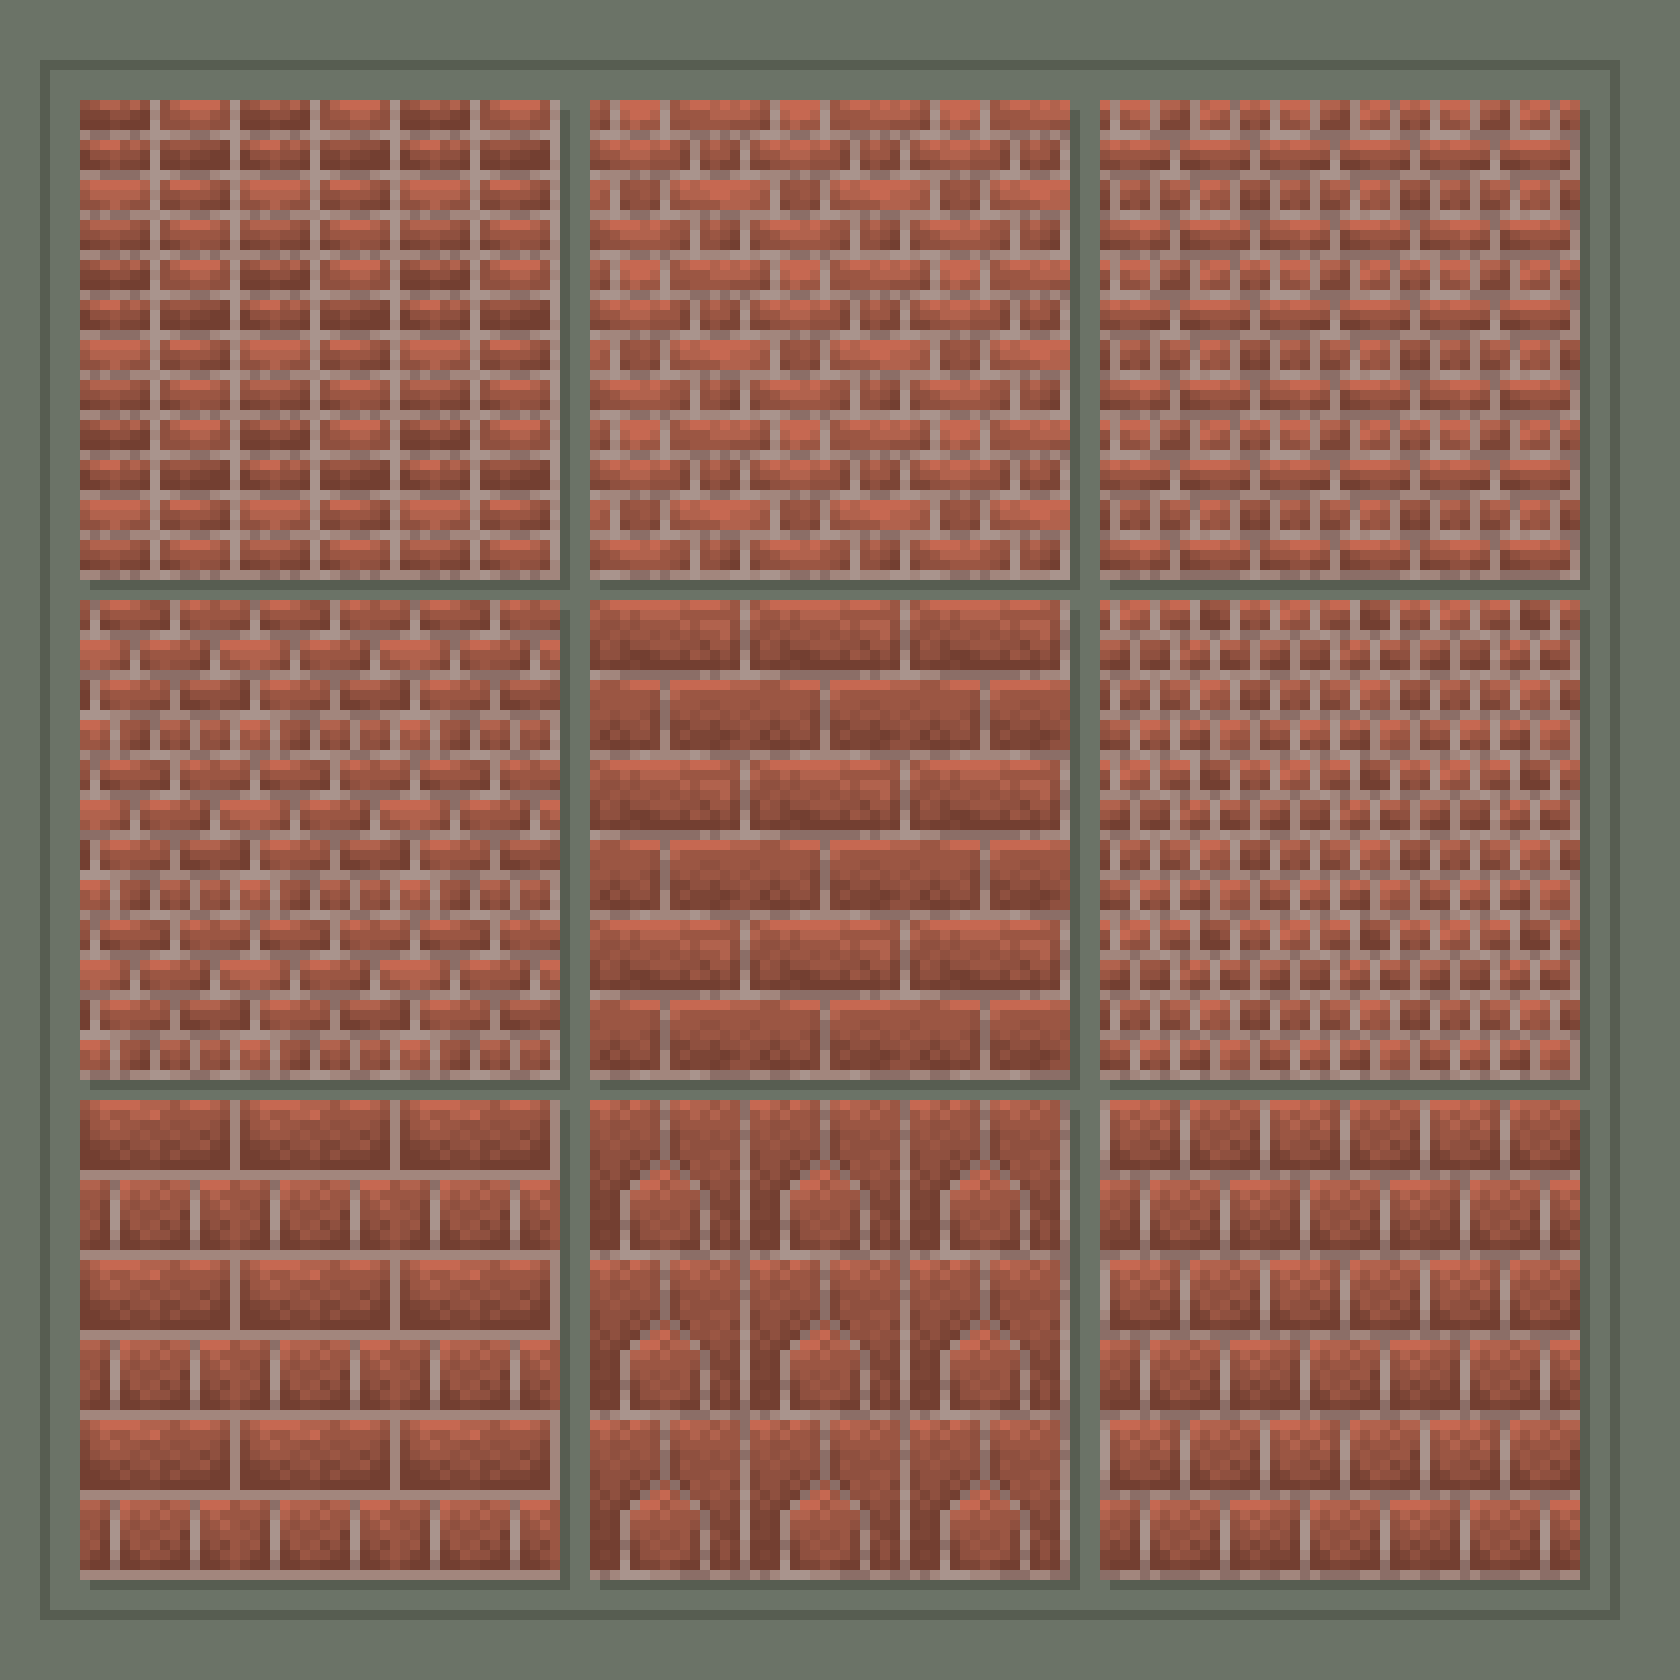 all the bricks